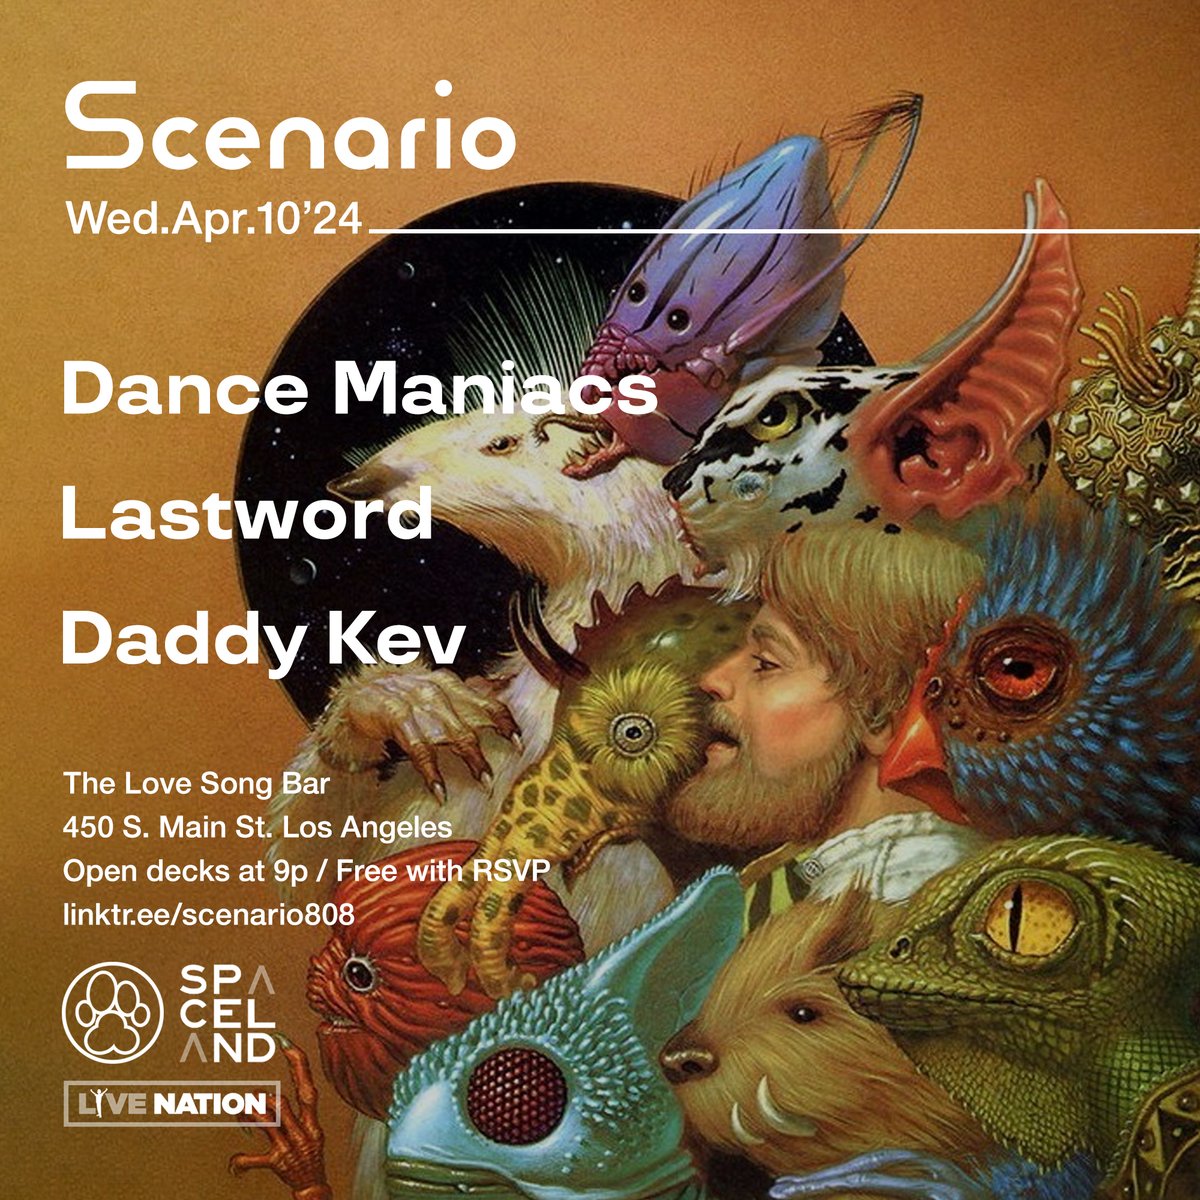 Tonight! Scenario 2024 Special Edition with #DanceManiacs (@__liano @AviLoud #OakCitySlums) #Lastword + @daddykev at @TheLoveSongBar. Open decks at 9p. Free with RSVP. Presented by @ALPHAPUP @SpacelandLA @LiveNation 🔊✨❤️ eventbrite.com/e/scenario-dan…